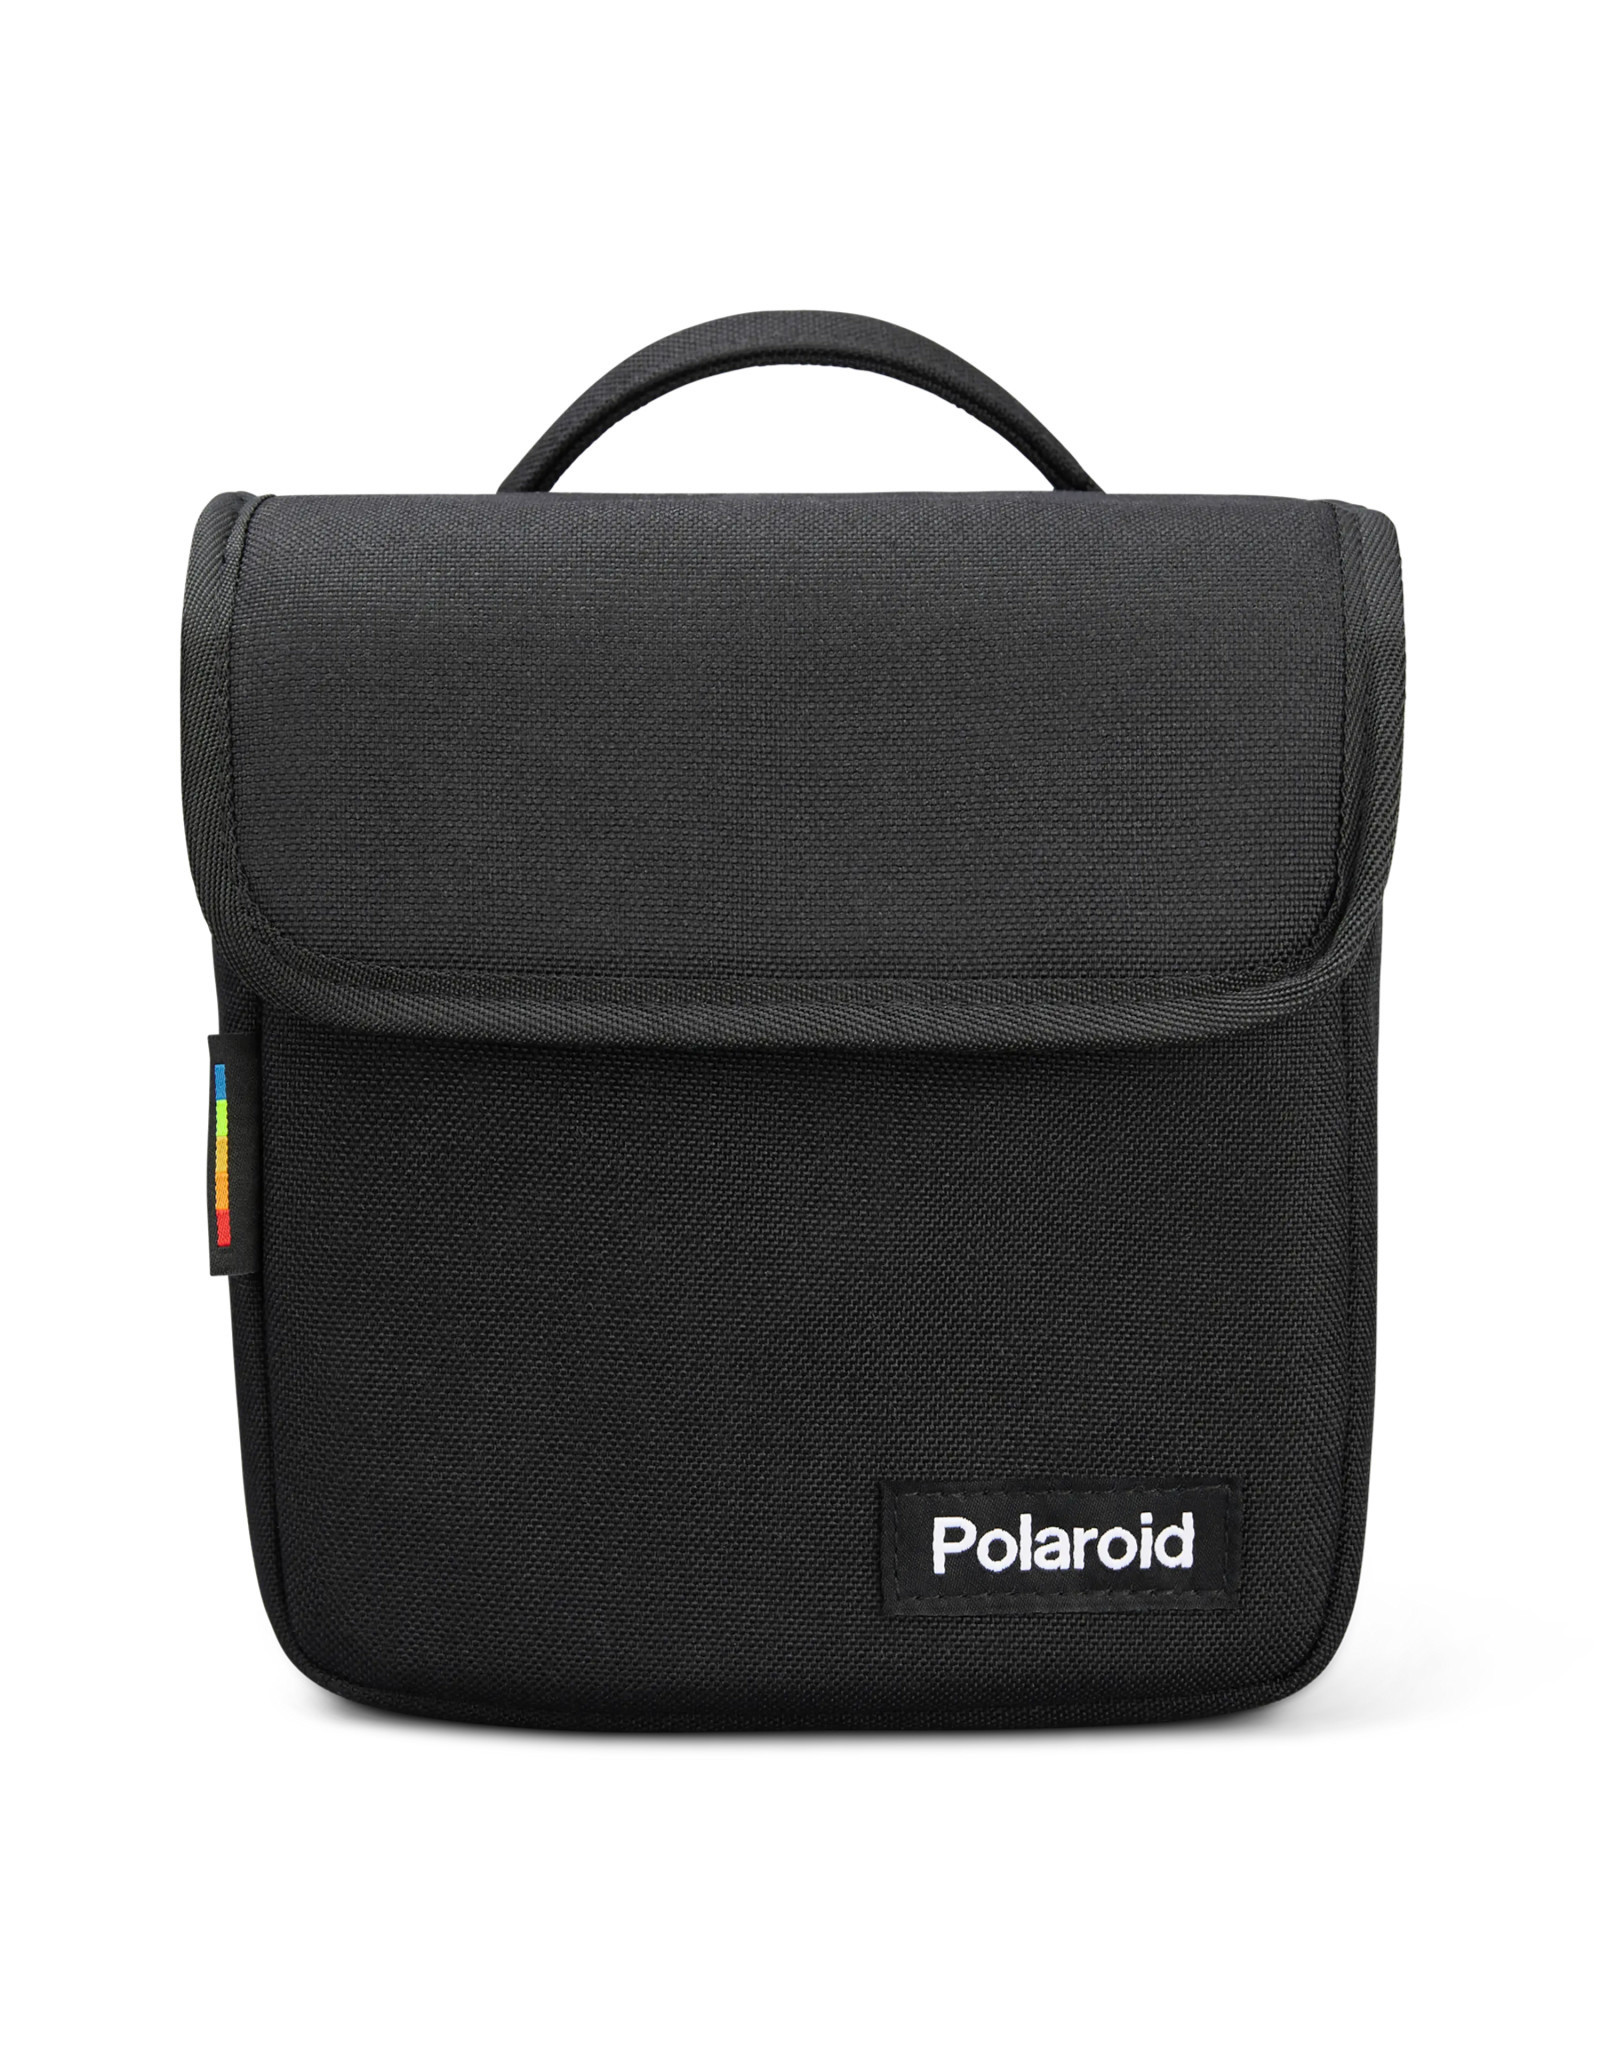 Polaroid Polaroid Box Camera Bag - Black